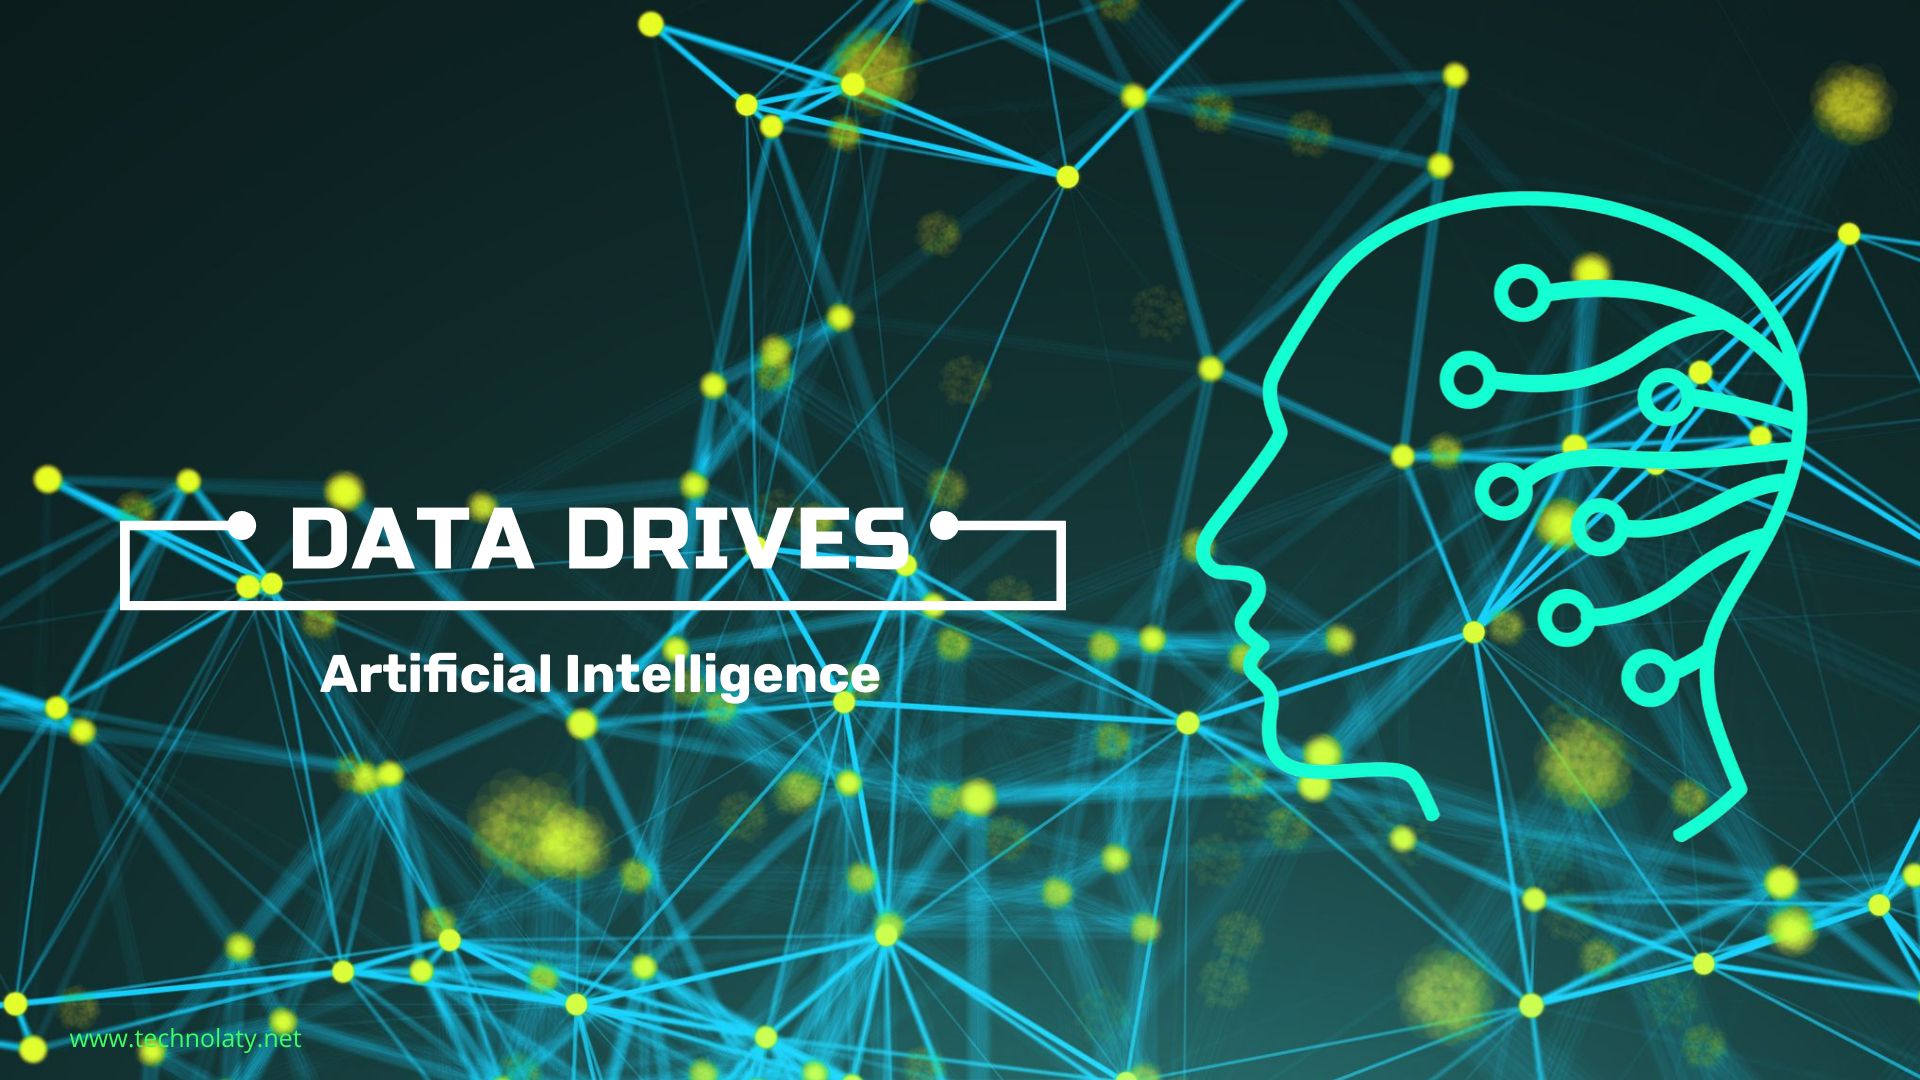 Data drives artificial intelligence